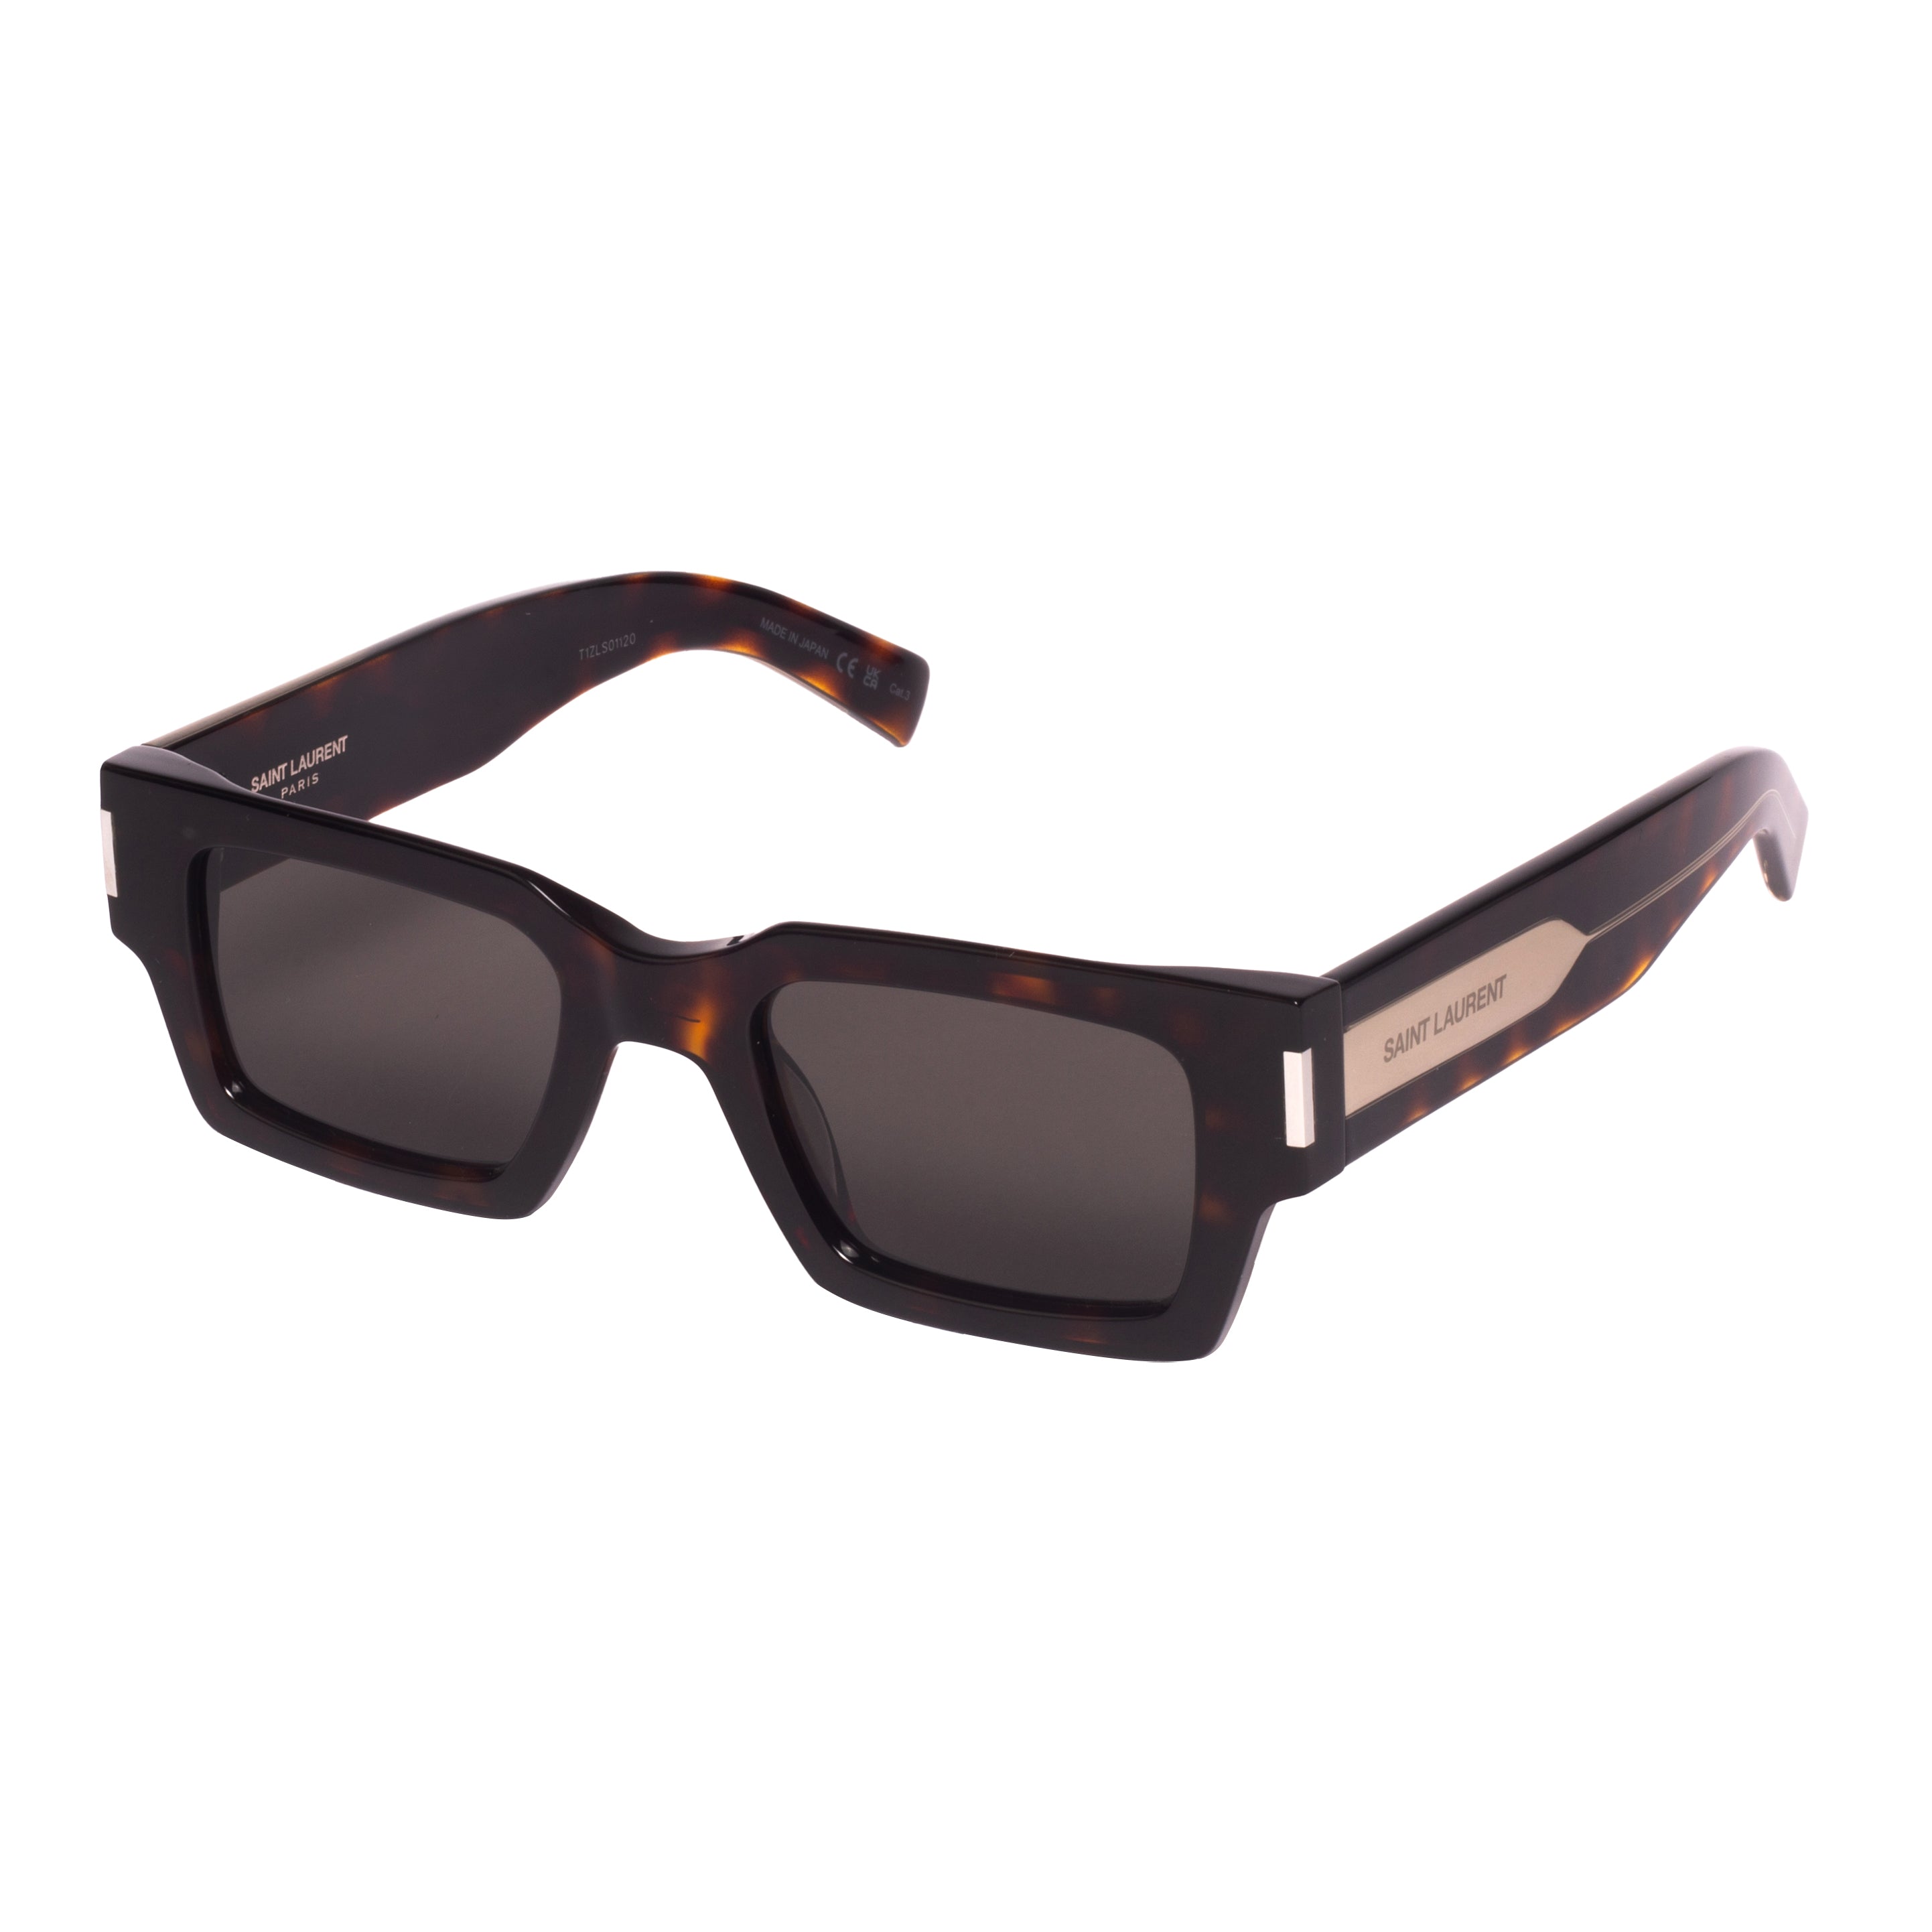 Saint Laurent-SL 572-50-002 Sunglasses - Premium Sunglasses from Saint Laurent - Just Rs. 30200! Shop now at Laxmi Opticians